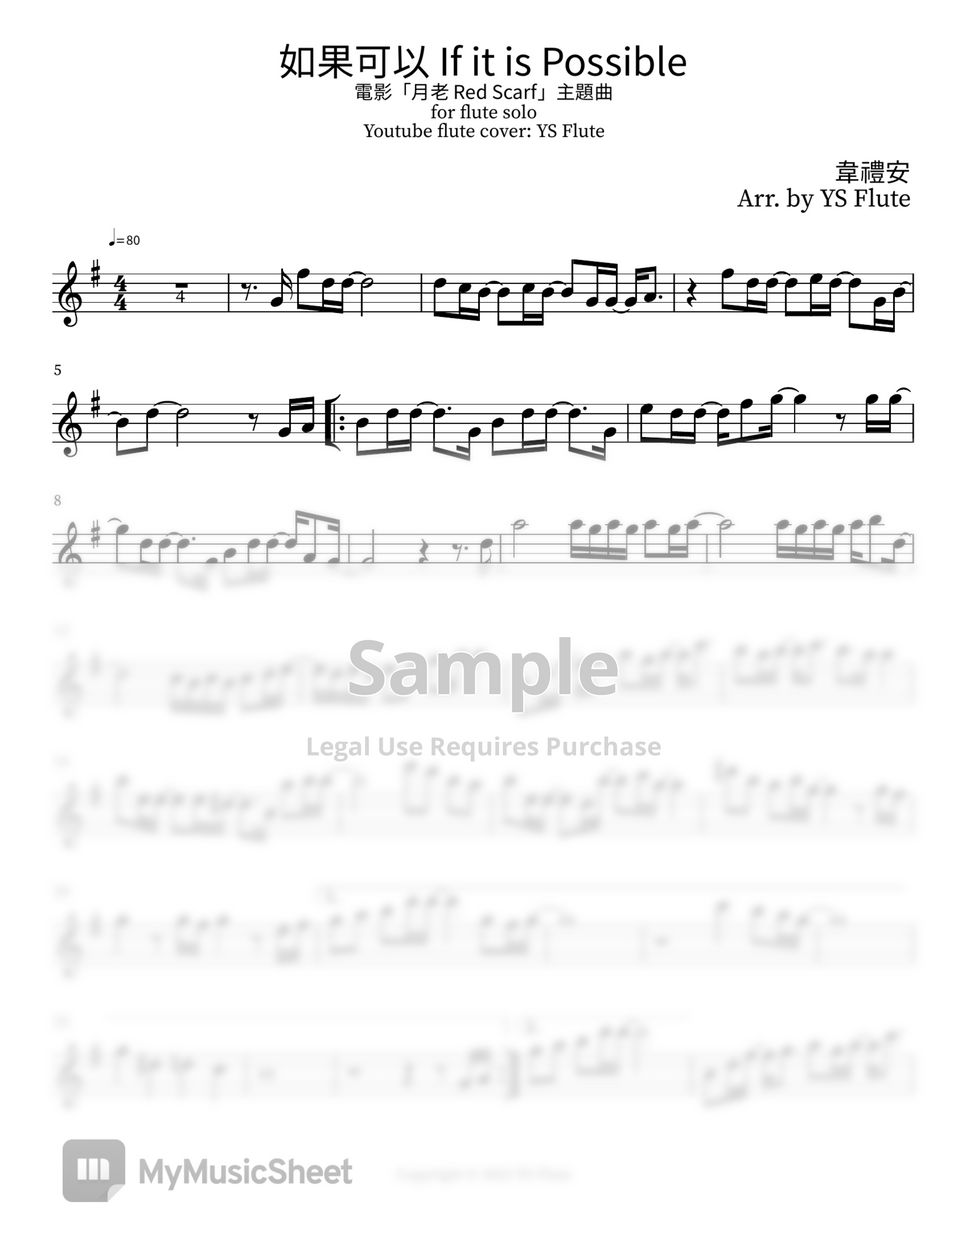 韋禮安 - 如果可以 長笛譜 [電影月老主題曲] (with Youtube Flute Cover) by YS Flute